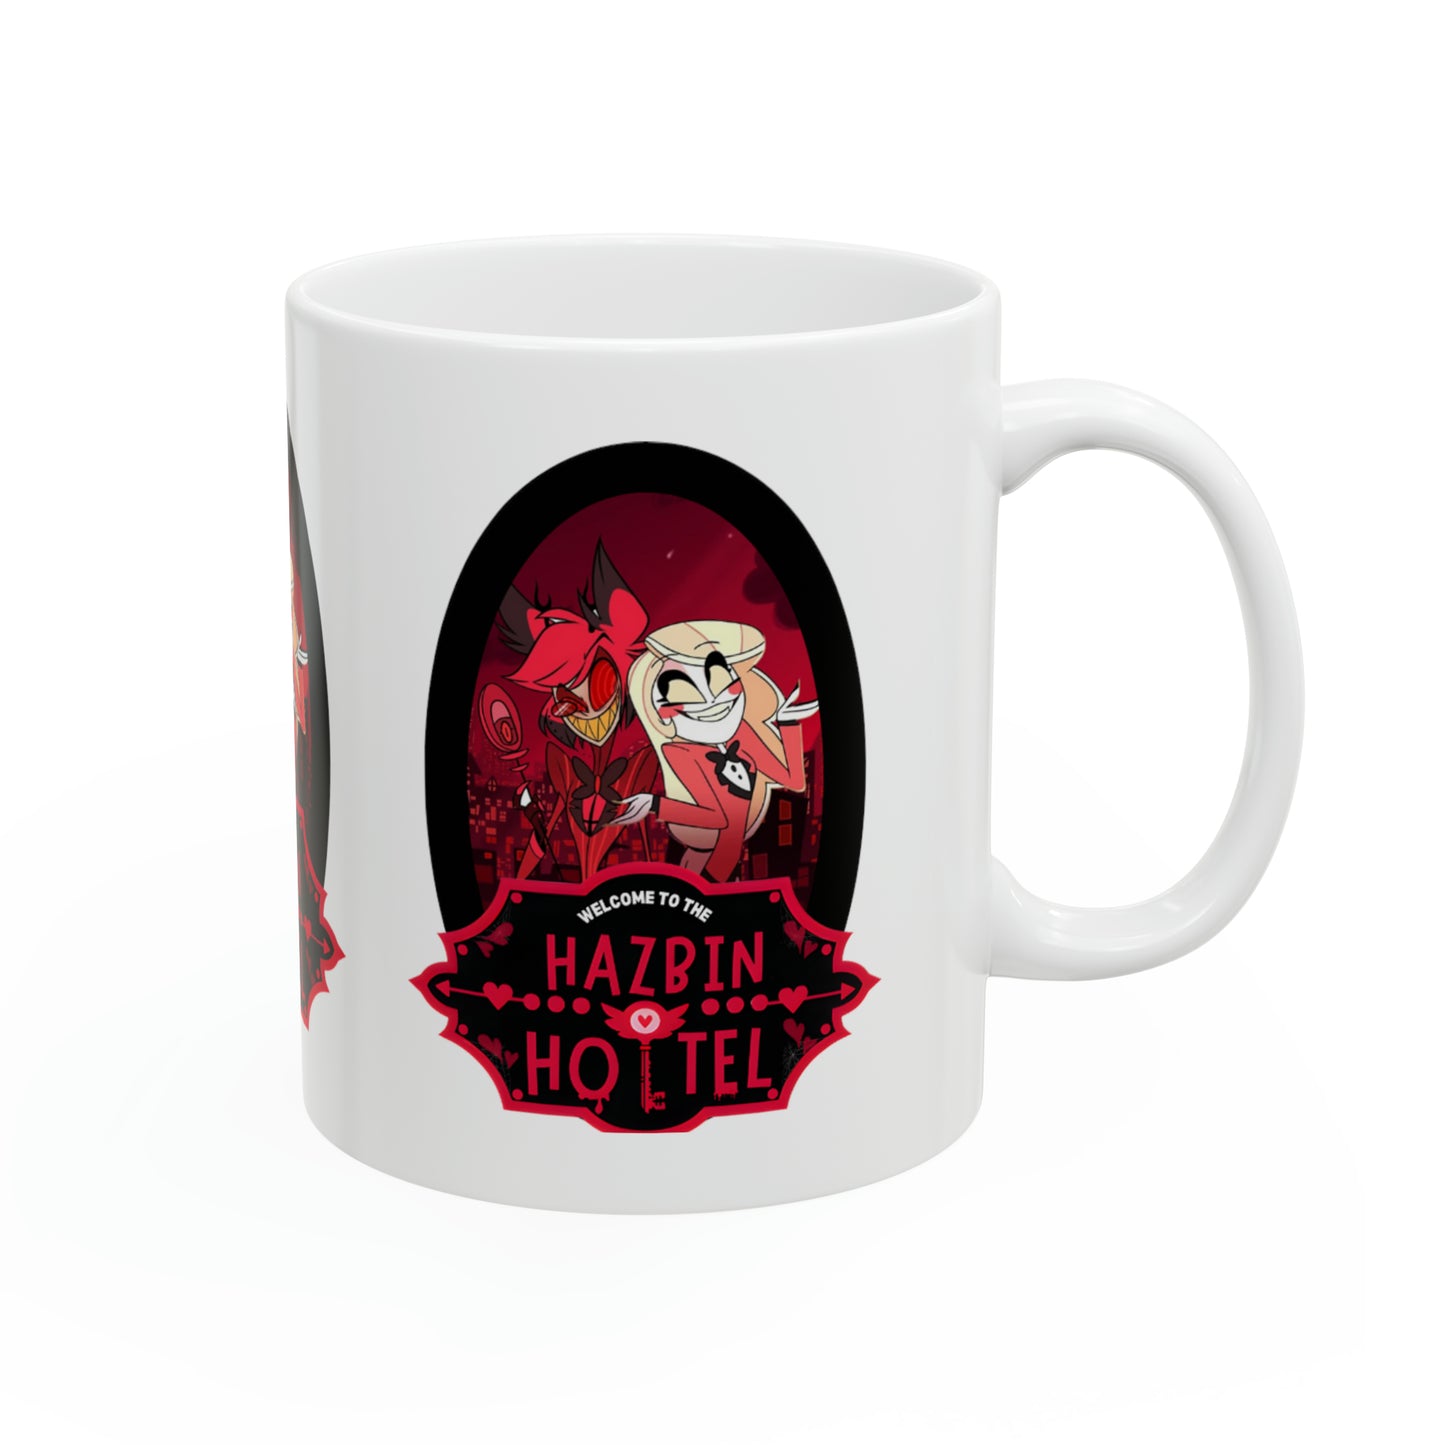 Alastor and Charlie Morningstar Coffee Mug | Welcome to the Hazbin Hotel Coffee Mug